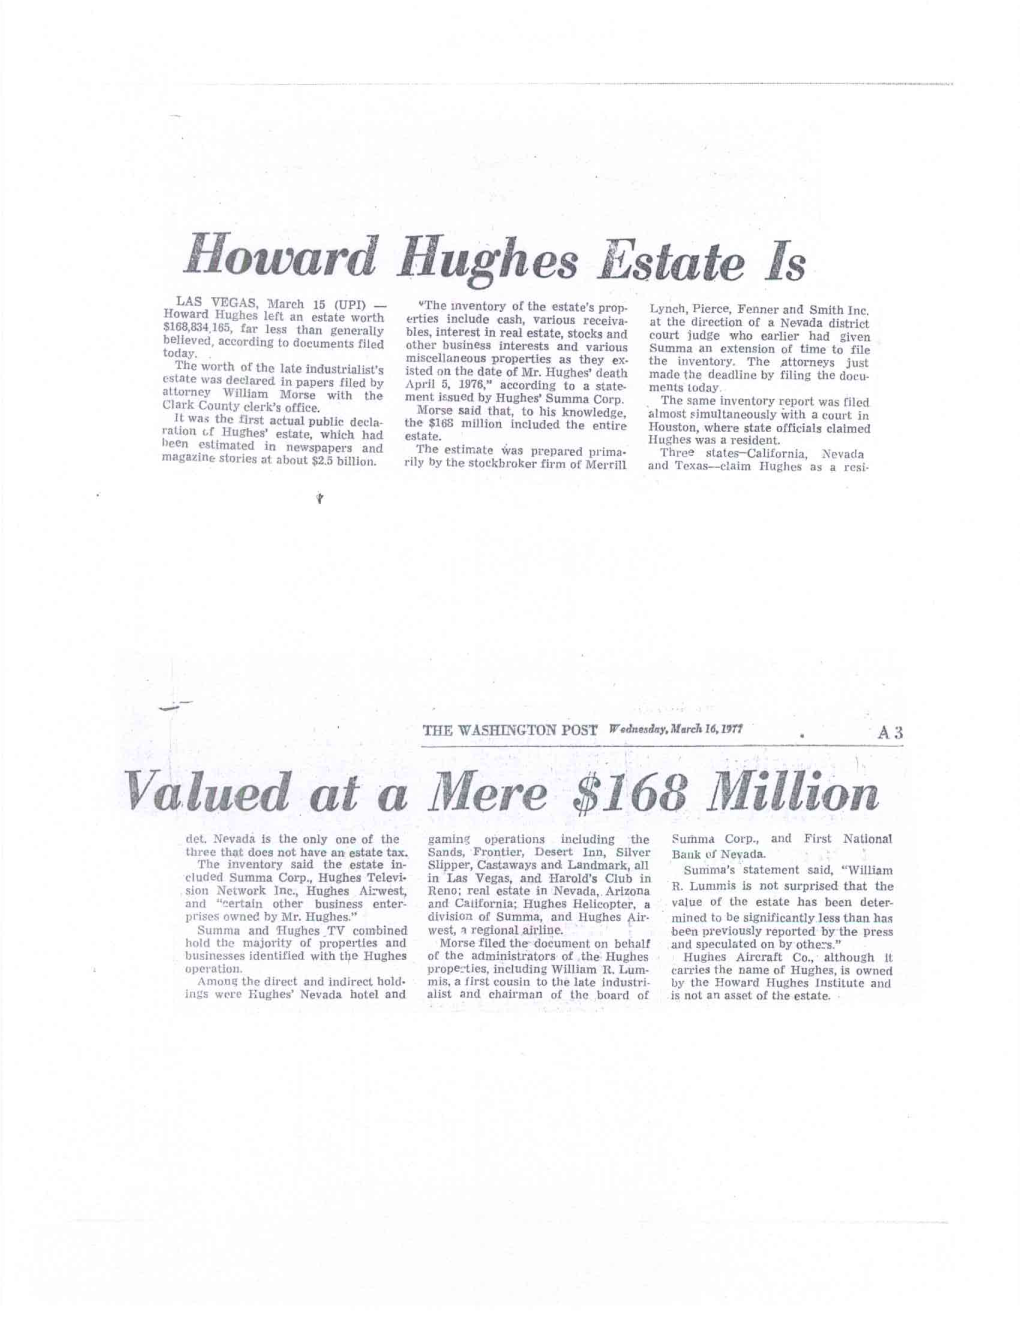 Howard Hughes Estate Is Valued at a Mere $168 Million